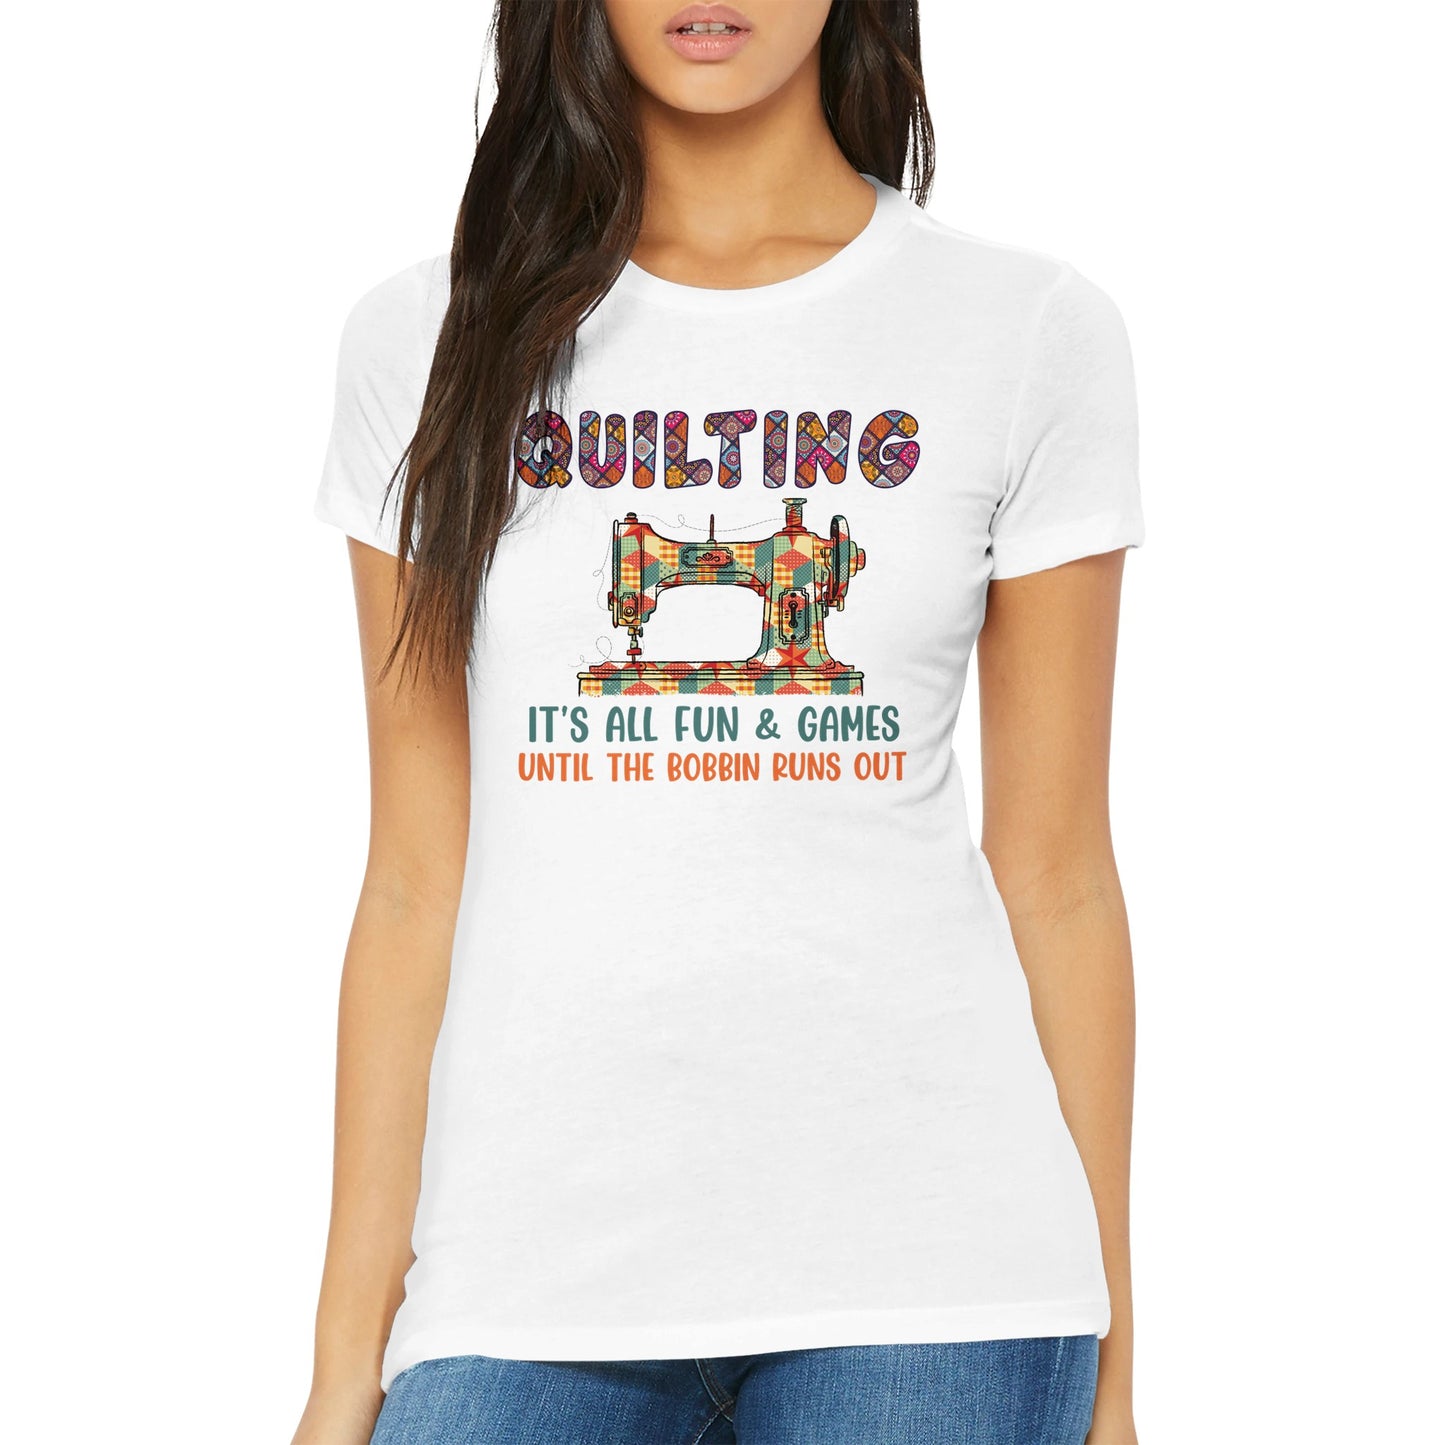 Quilting It's All Fun & Games Until the Bobbin Runs Out - Premium Women's Crewneck T-shirt